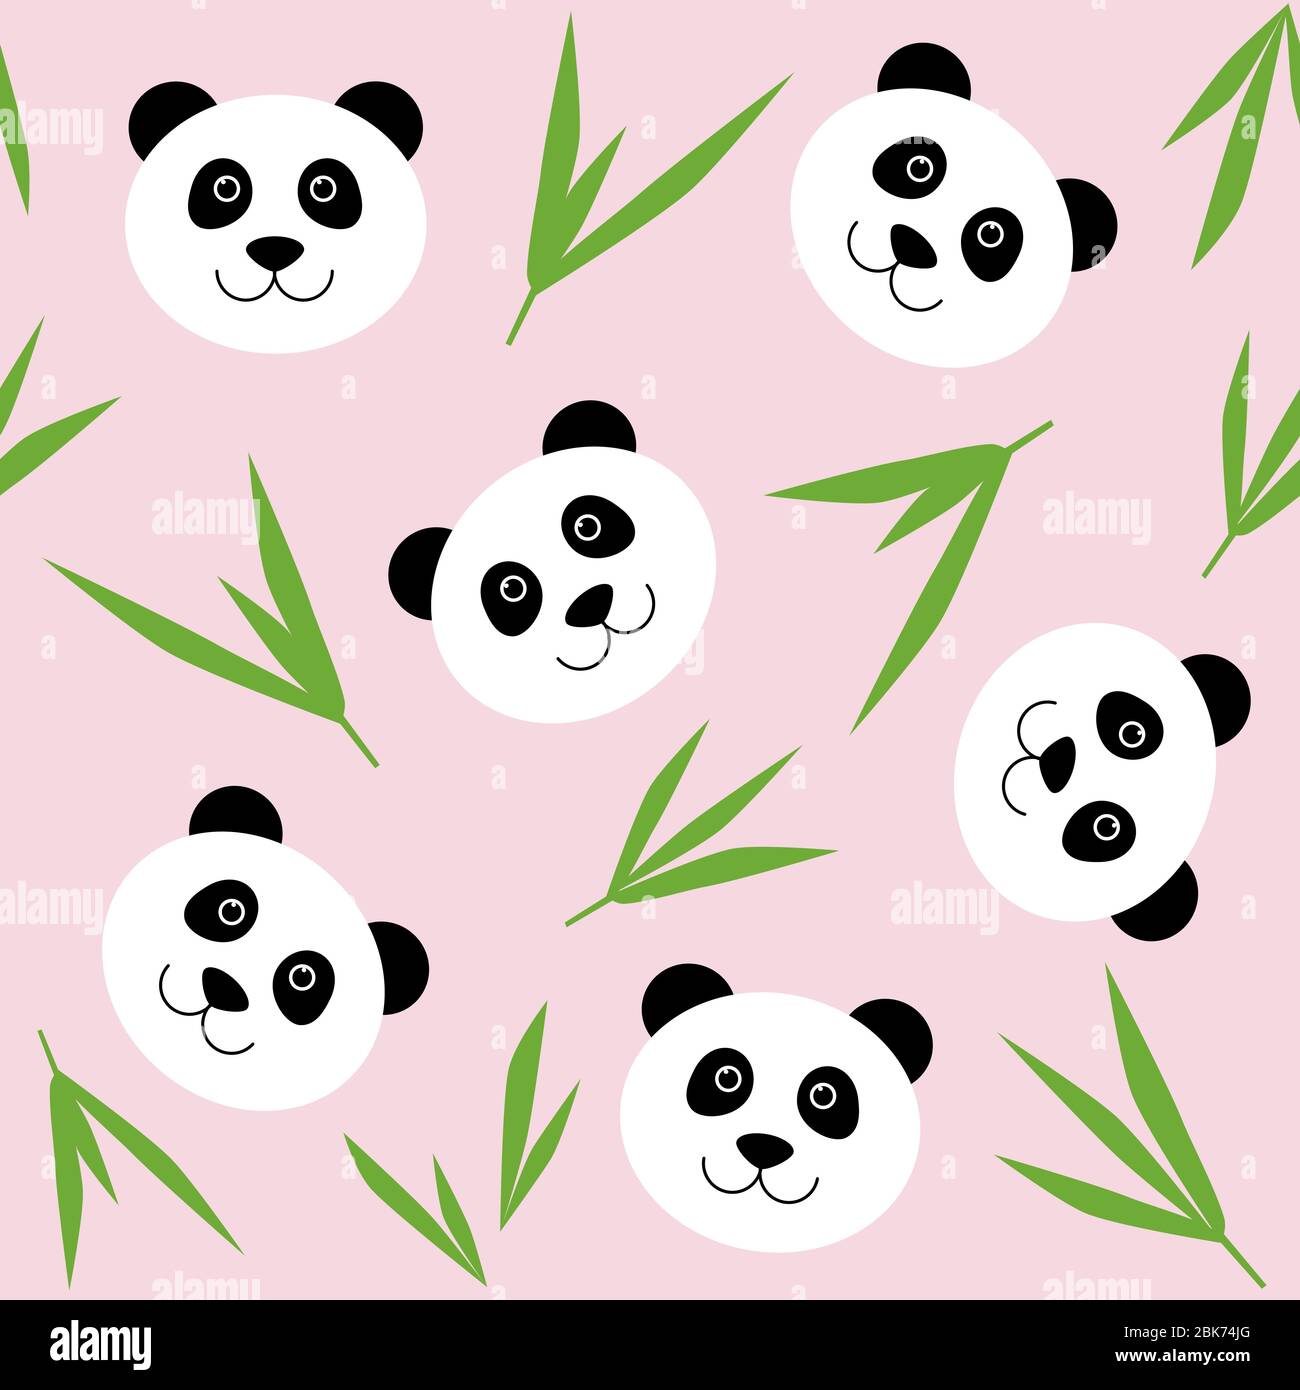 Dibujo animado panda cara sin costuras. Lindo fondo rosa infantil con oso  panda cara kawaii y hojas de bambú Imagen Vector de stock - Alamy